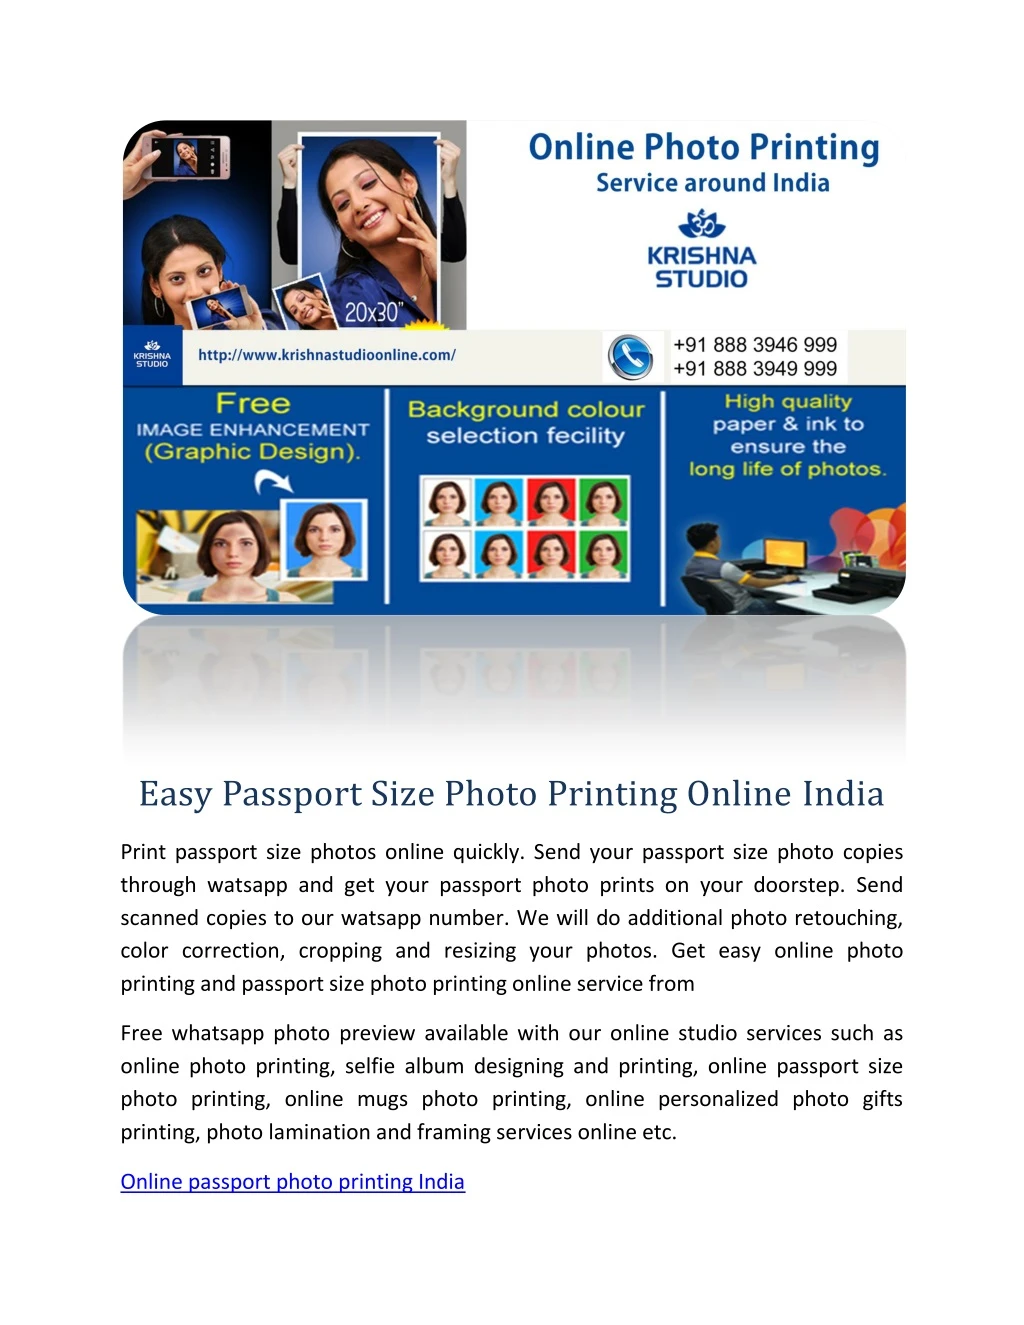 easy passport size photo printing online india